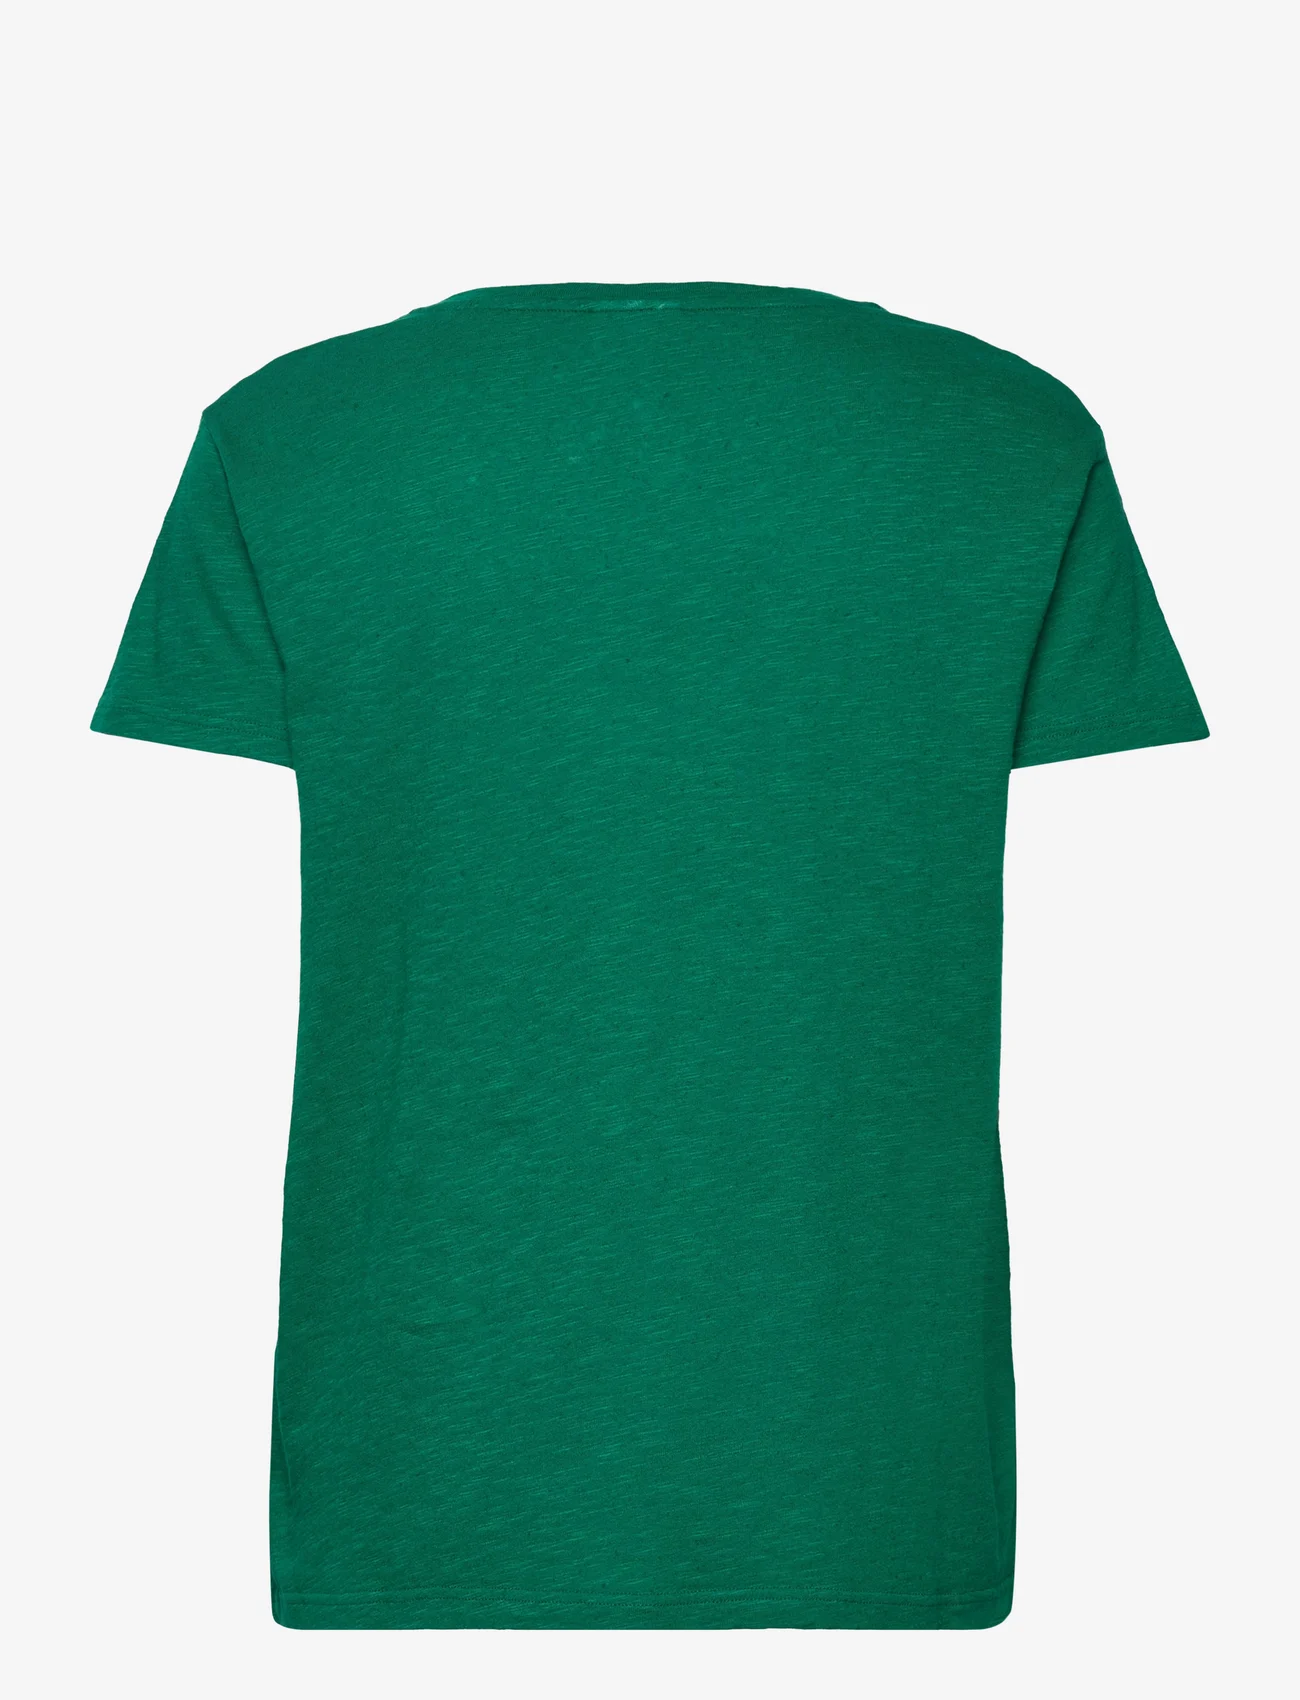 2NDDAY - 2ND Beverly - marškinėliai - ultramarine green - 1